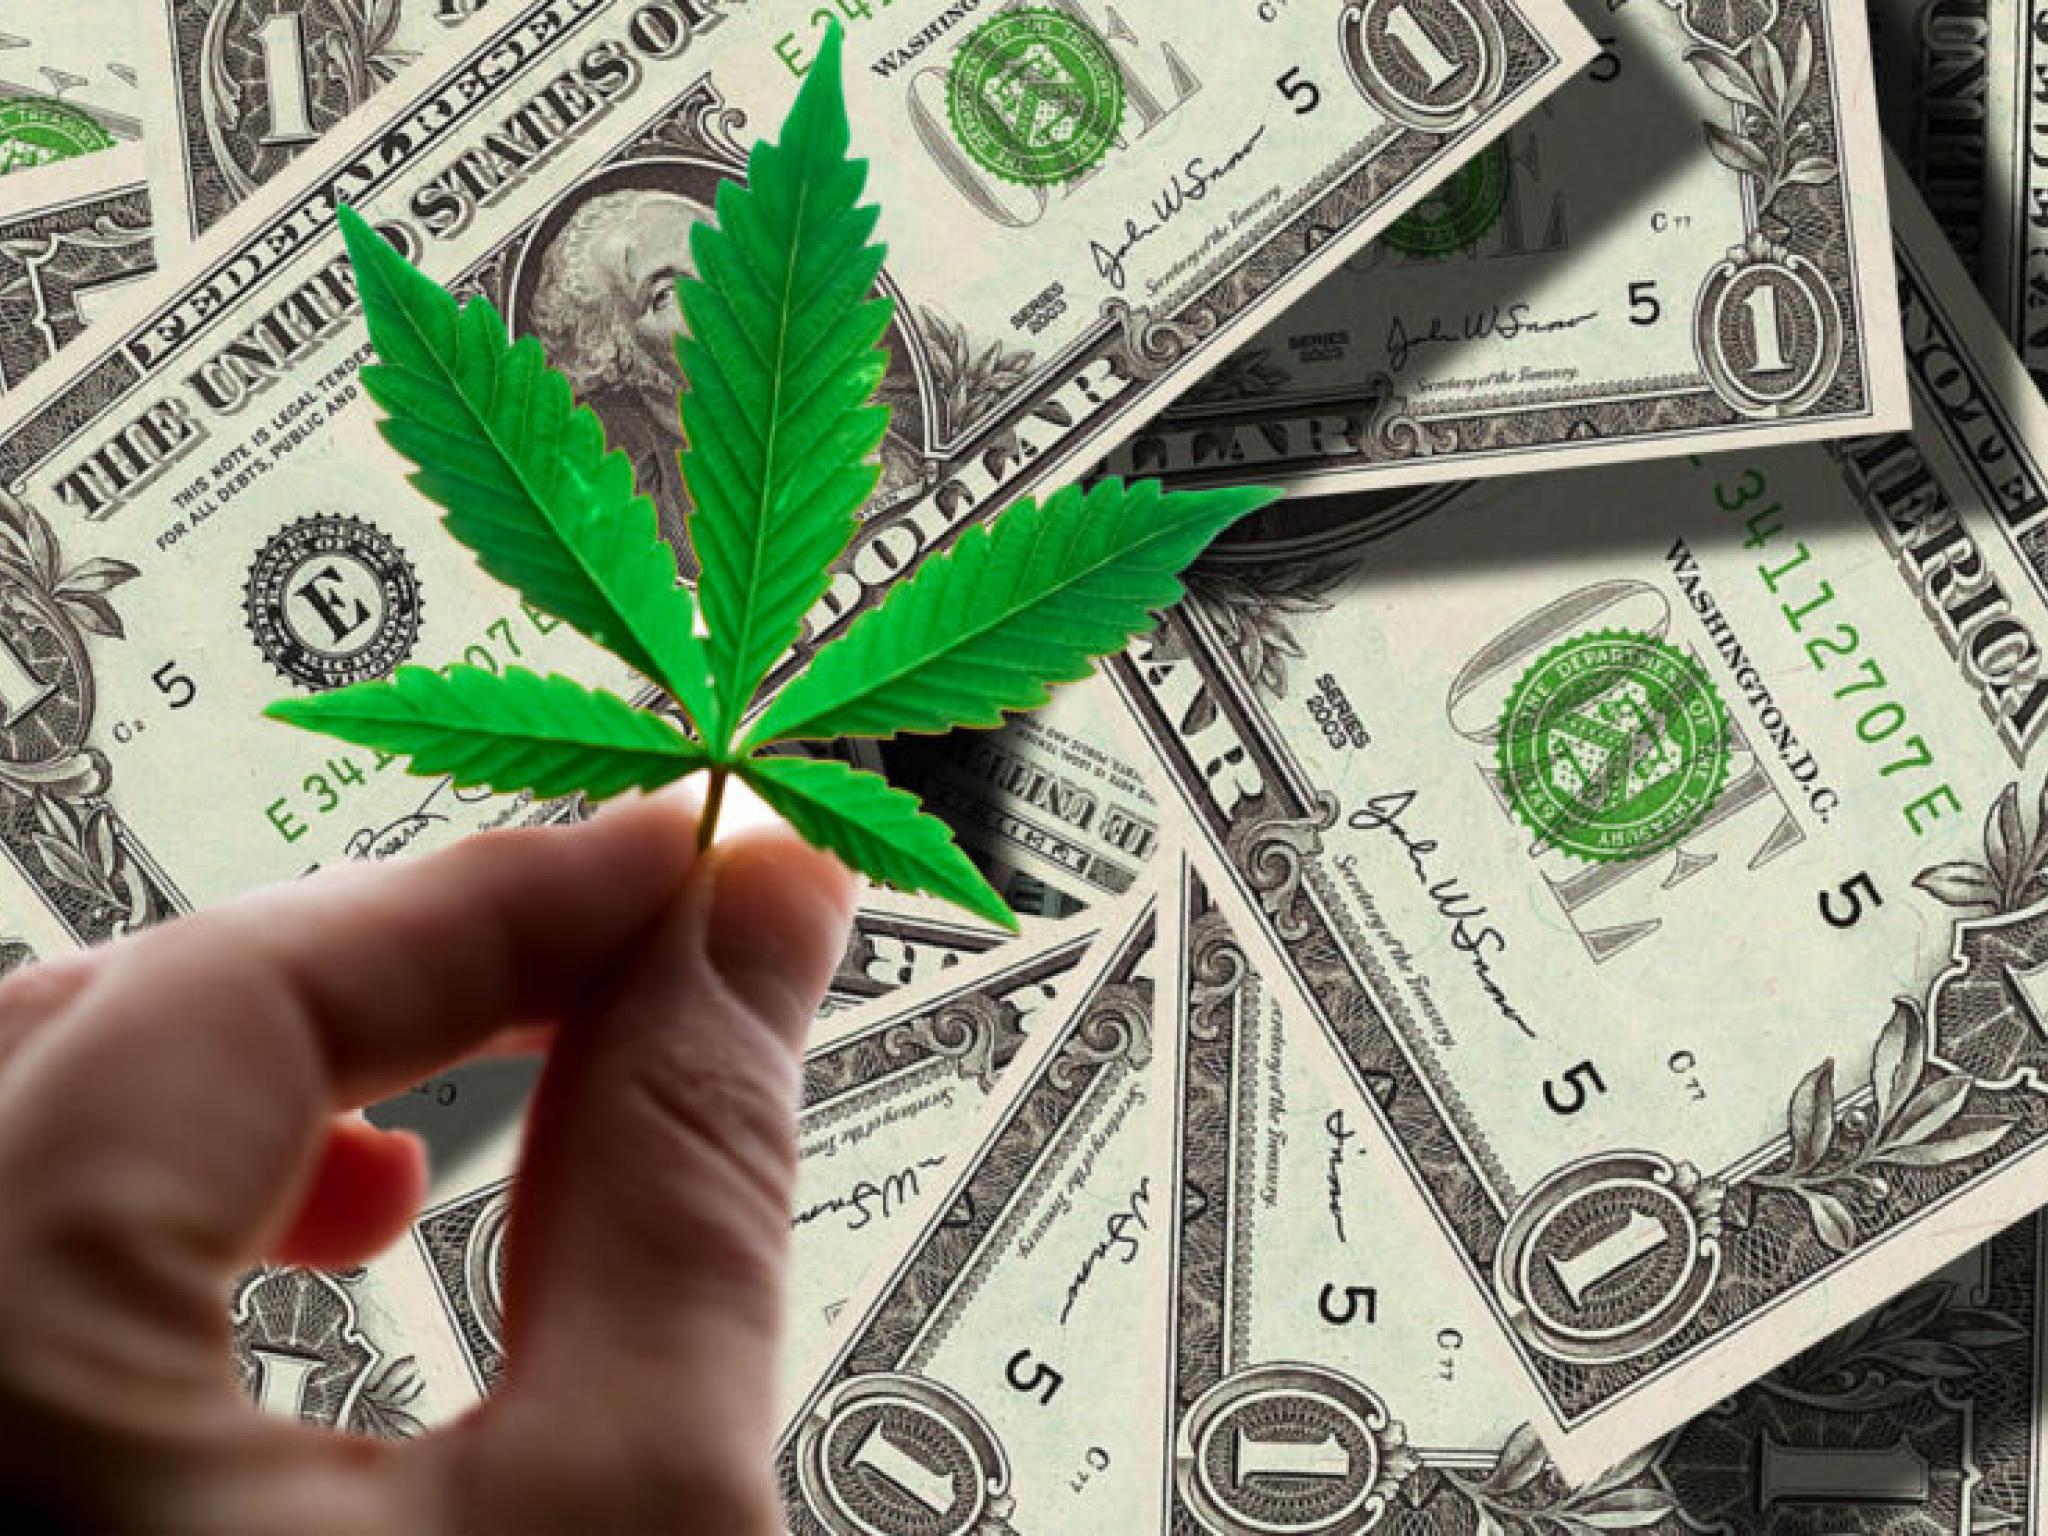  cannabis-vaping-sales-propel-q2-revenue-for-marijuana-co-doing-business-with-burna-boy-berner 